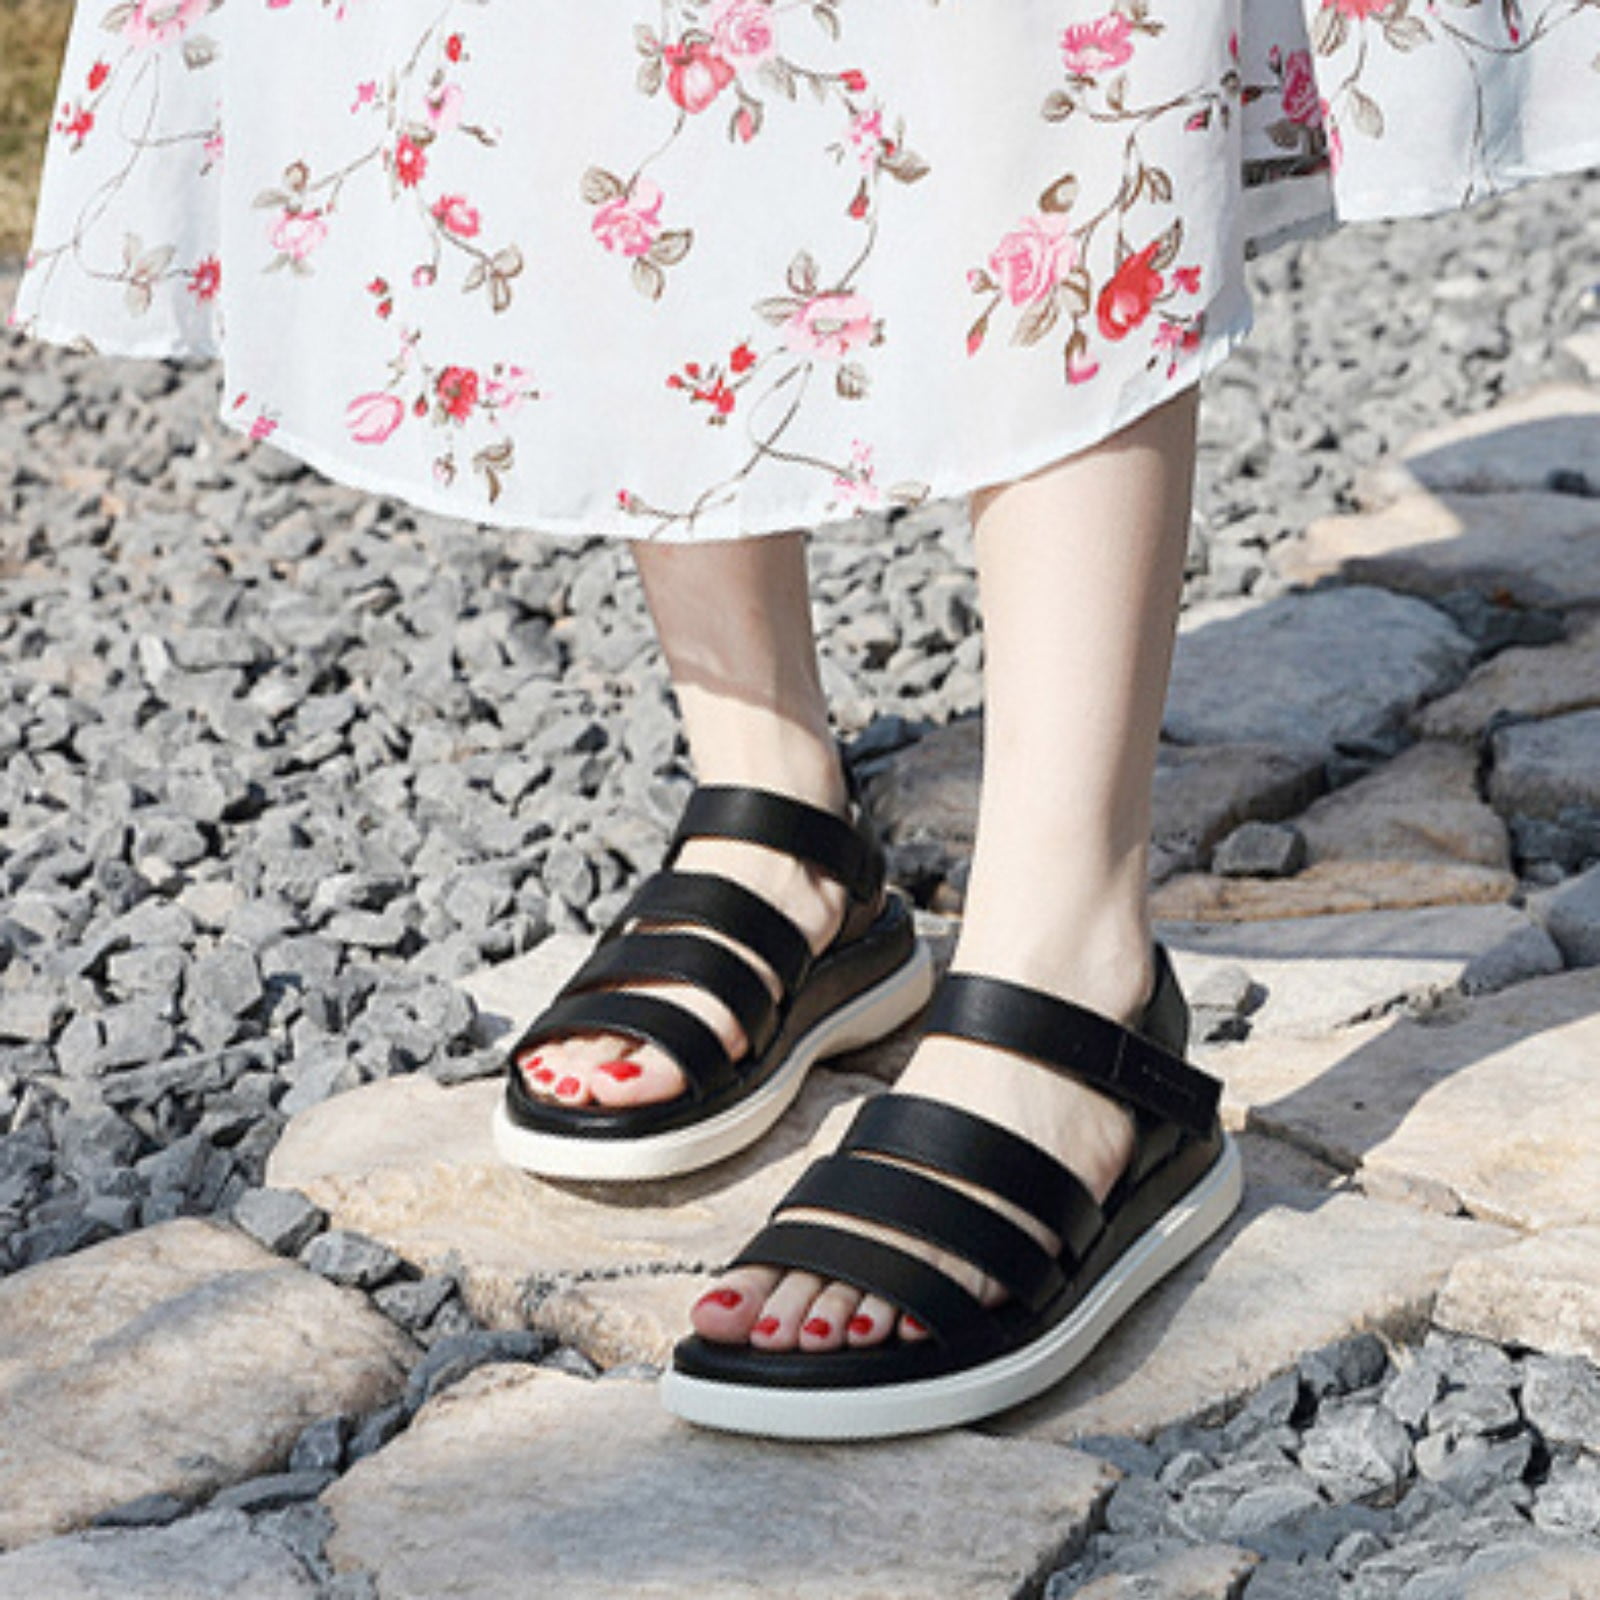 Stylish and comfortable Summer sandals - FashioNZ